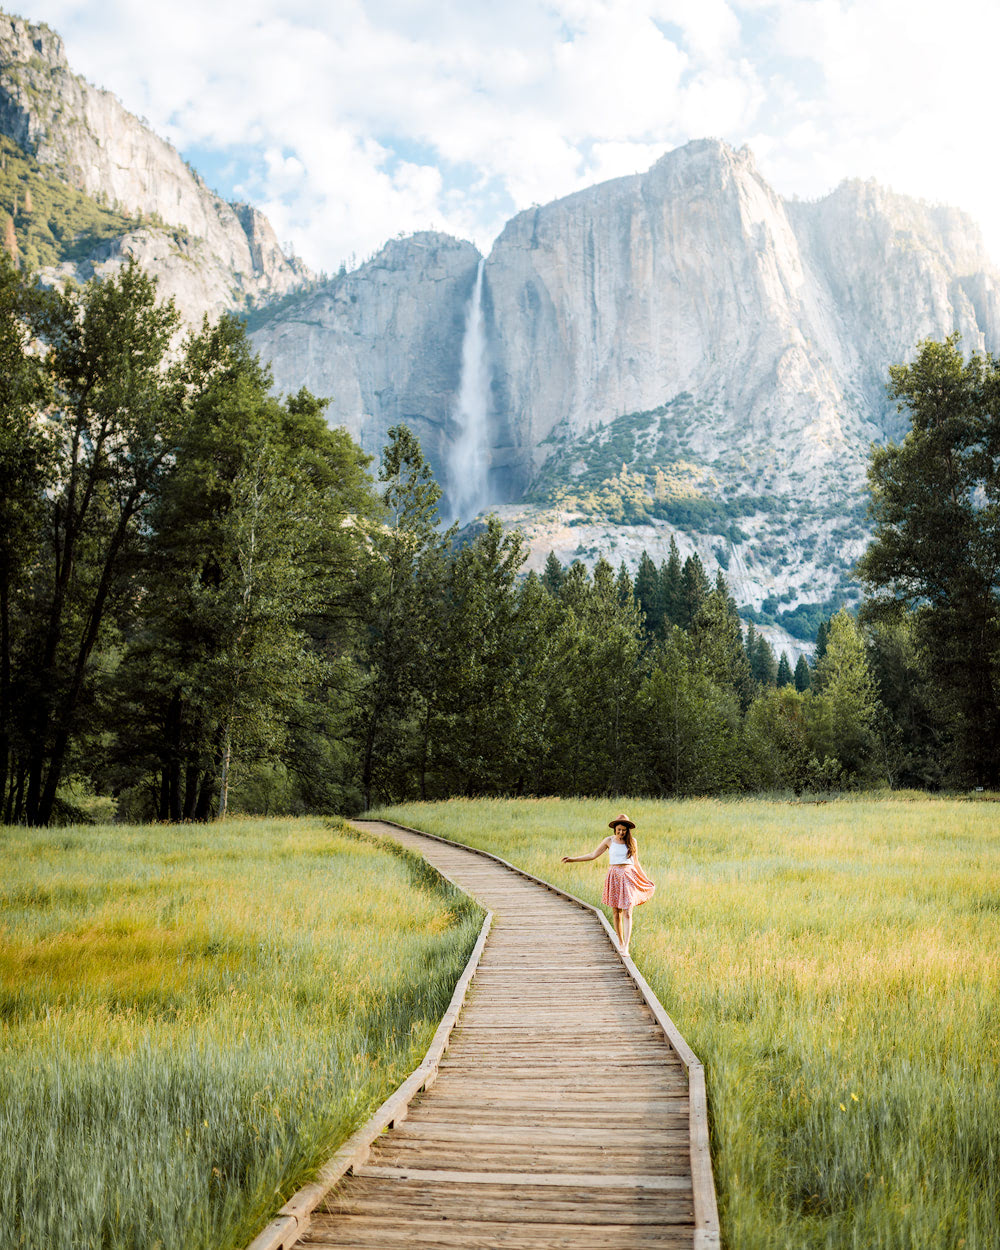 The Ultimate Guide to Exploring Yosemite National Park - Yosemite Valley Boardwalk